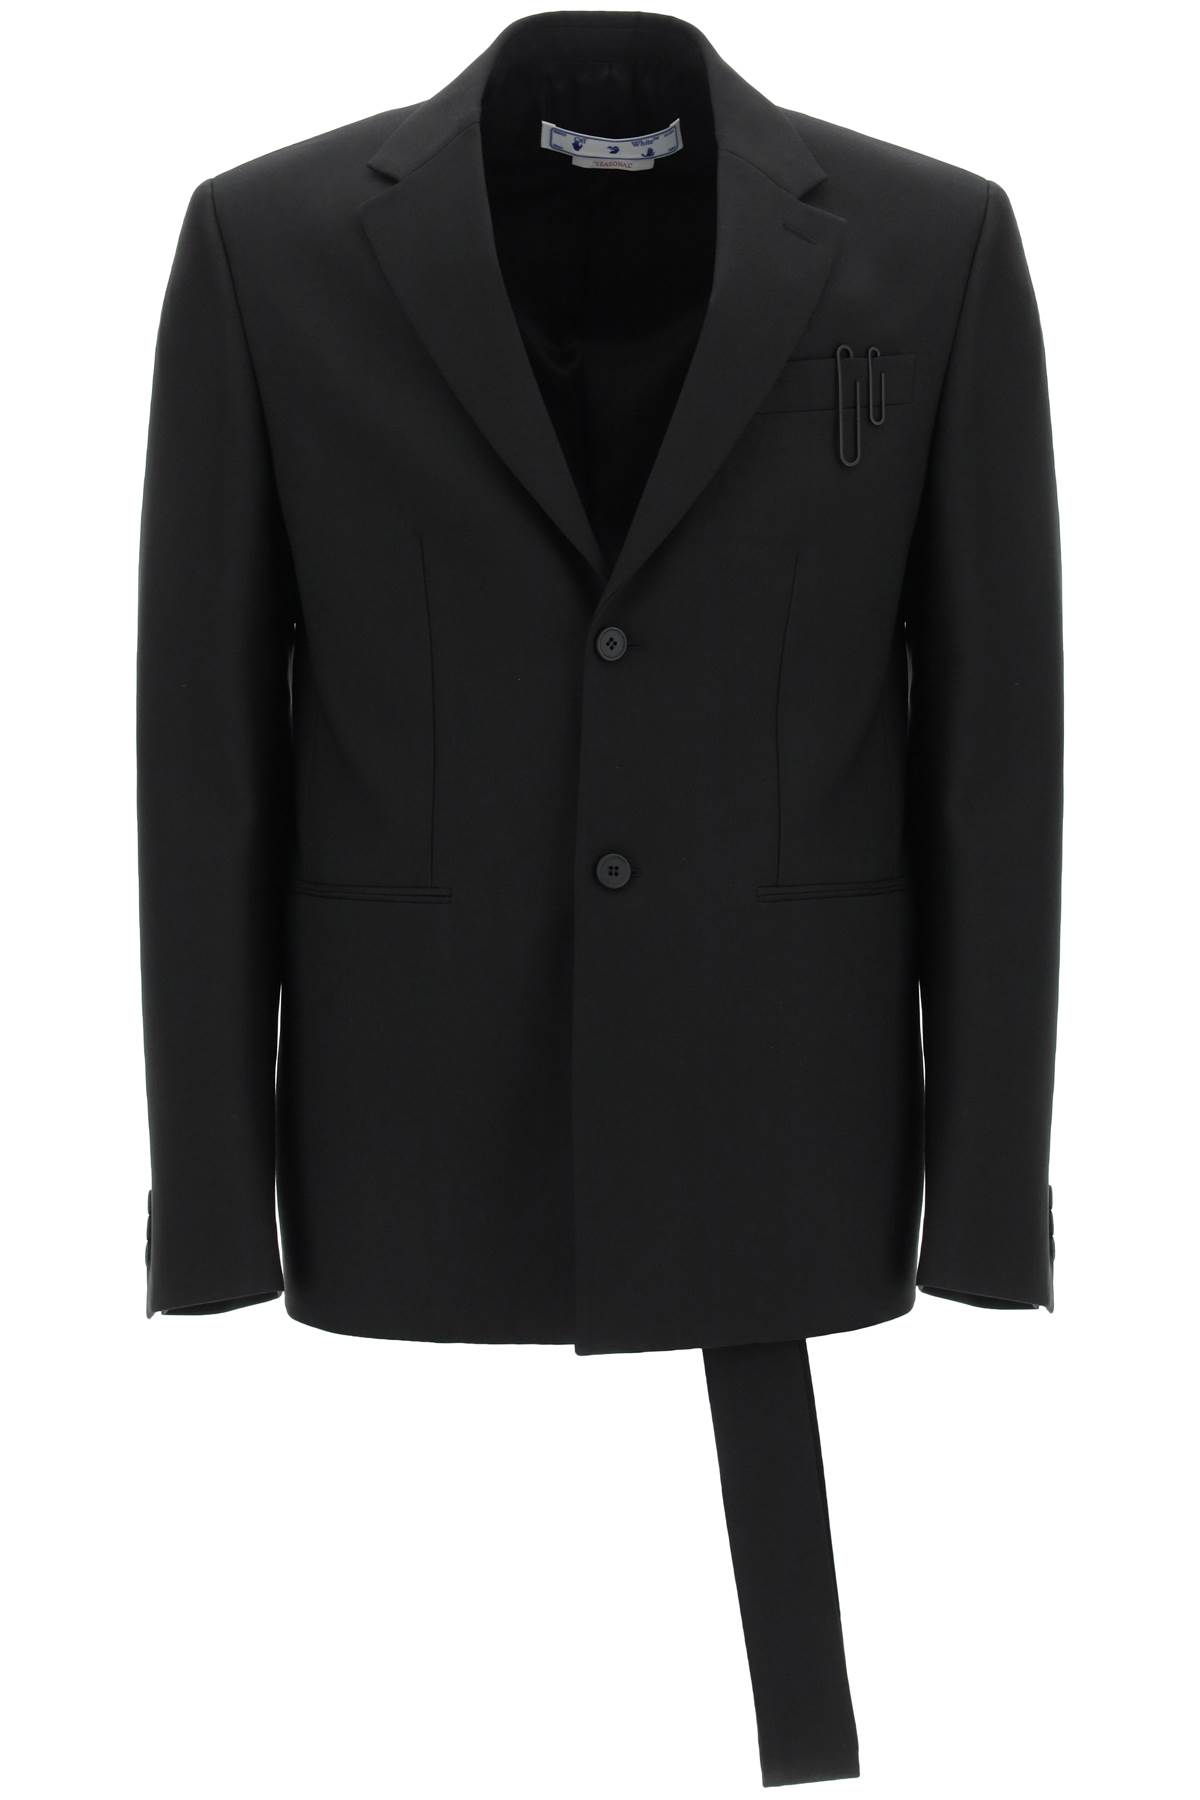 Off-white Blazer With Adjustable Mock Tie In Black